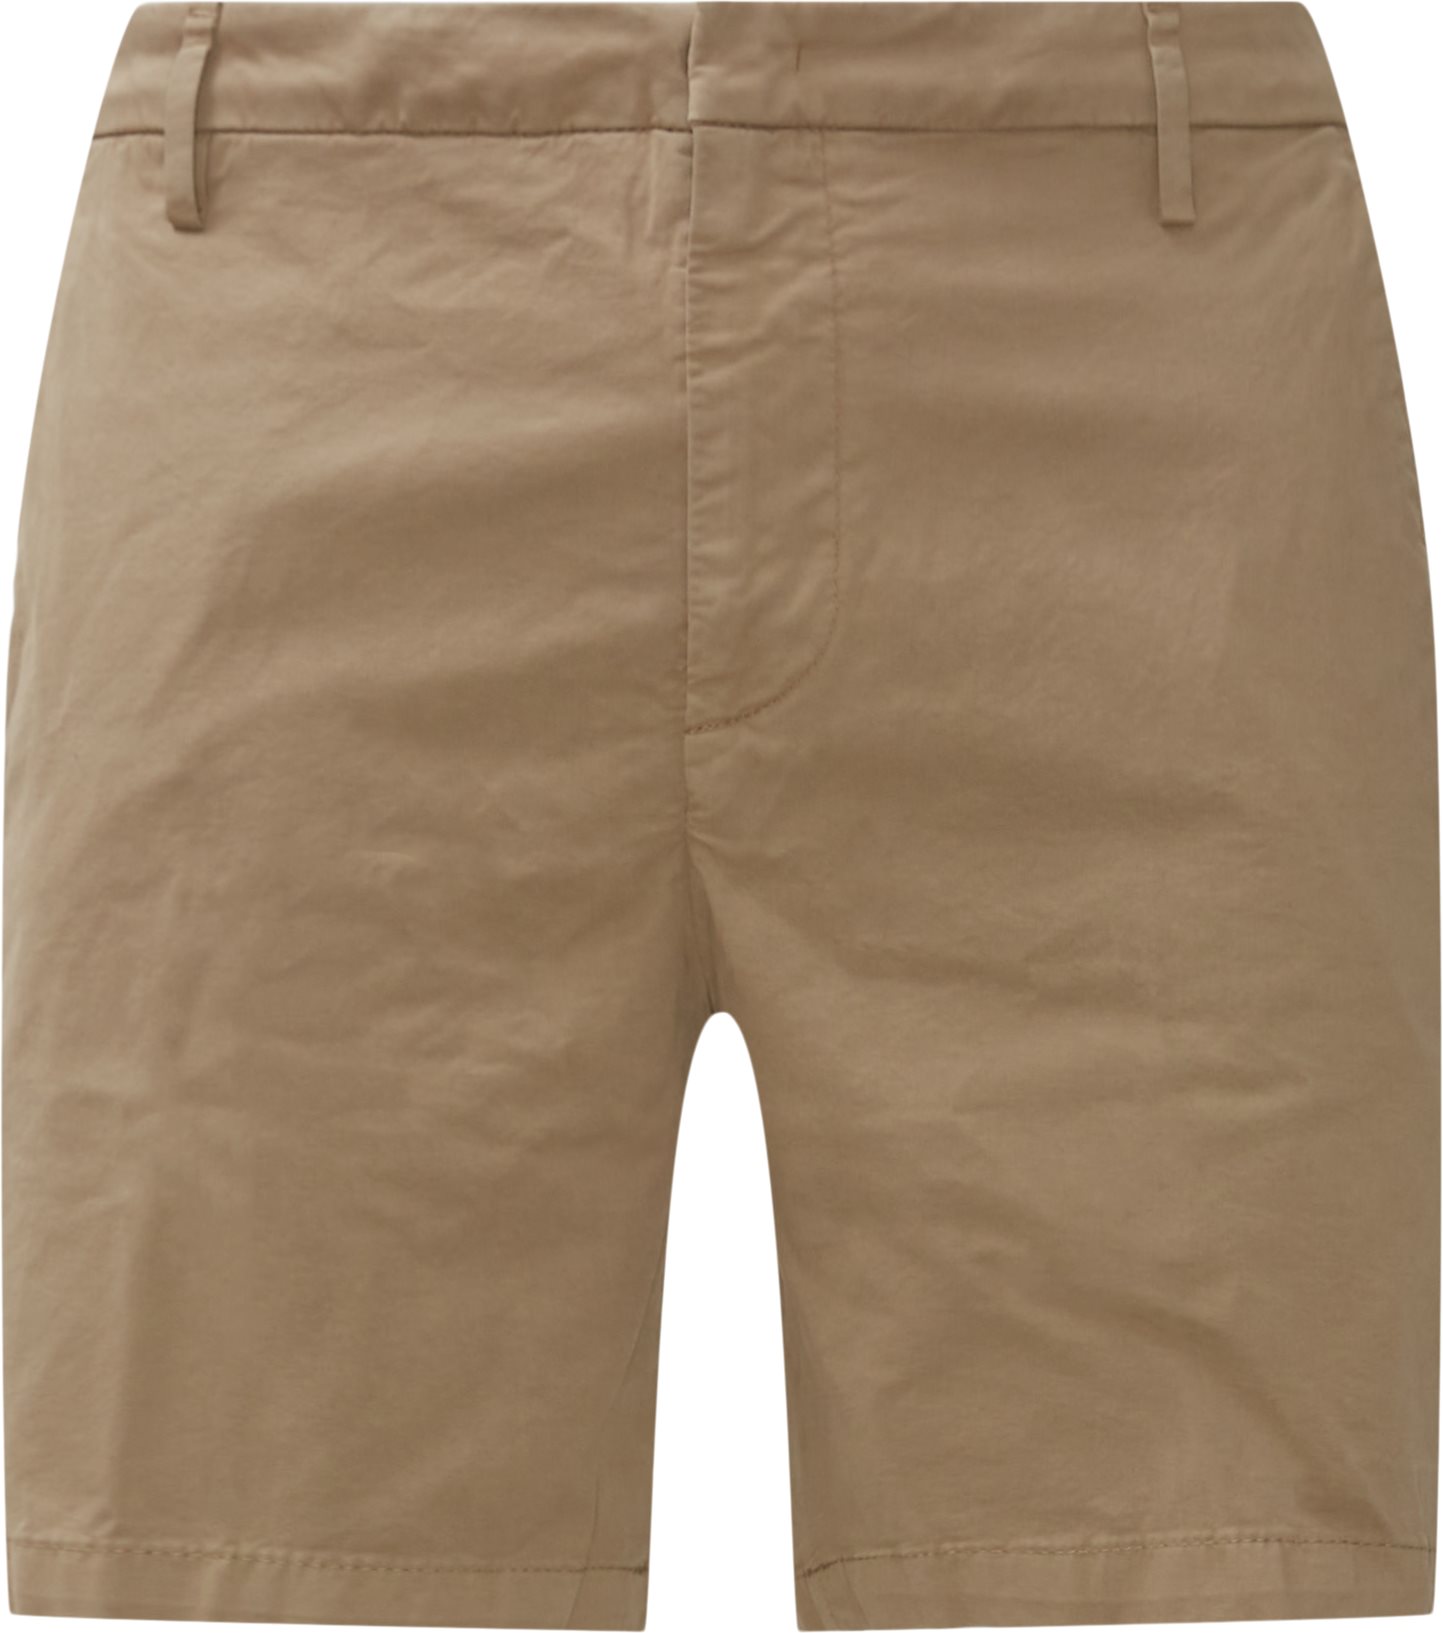 Classic Chino Shorts - Shorts - Regular fit - Sand